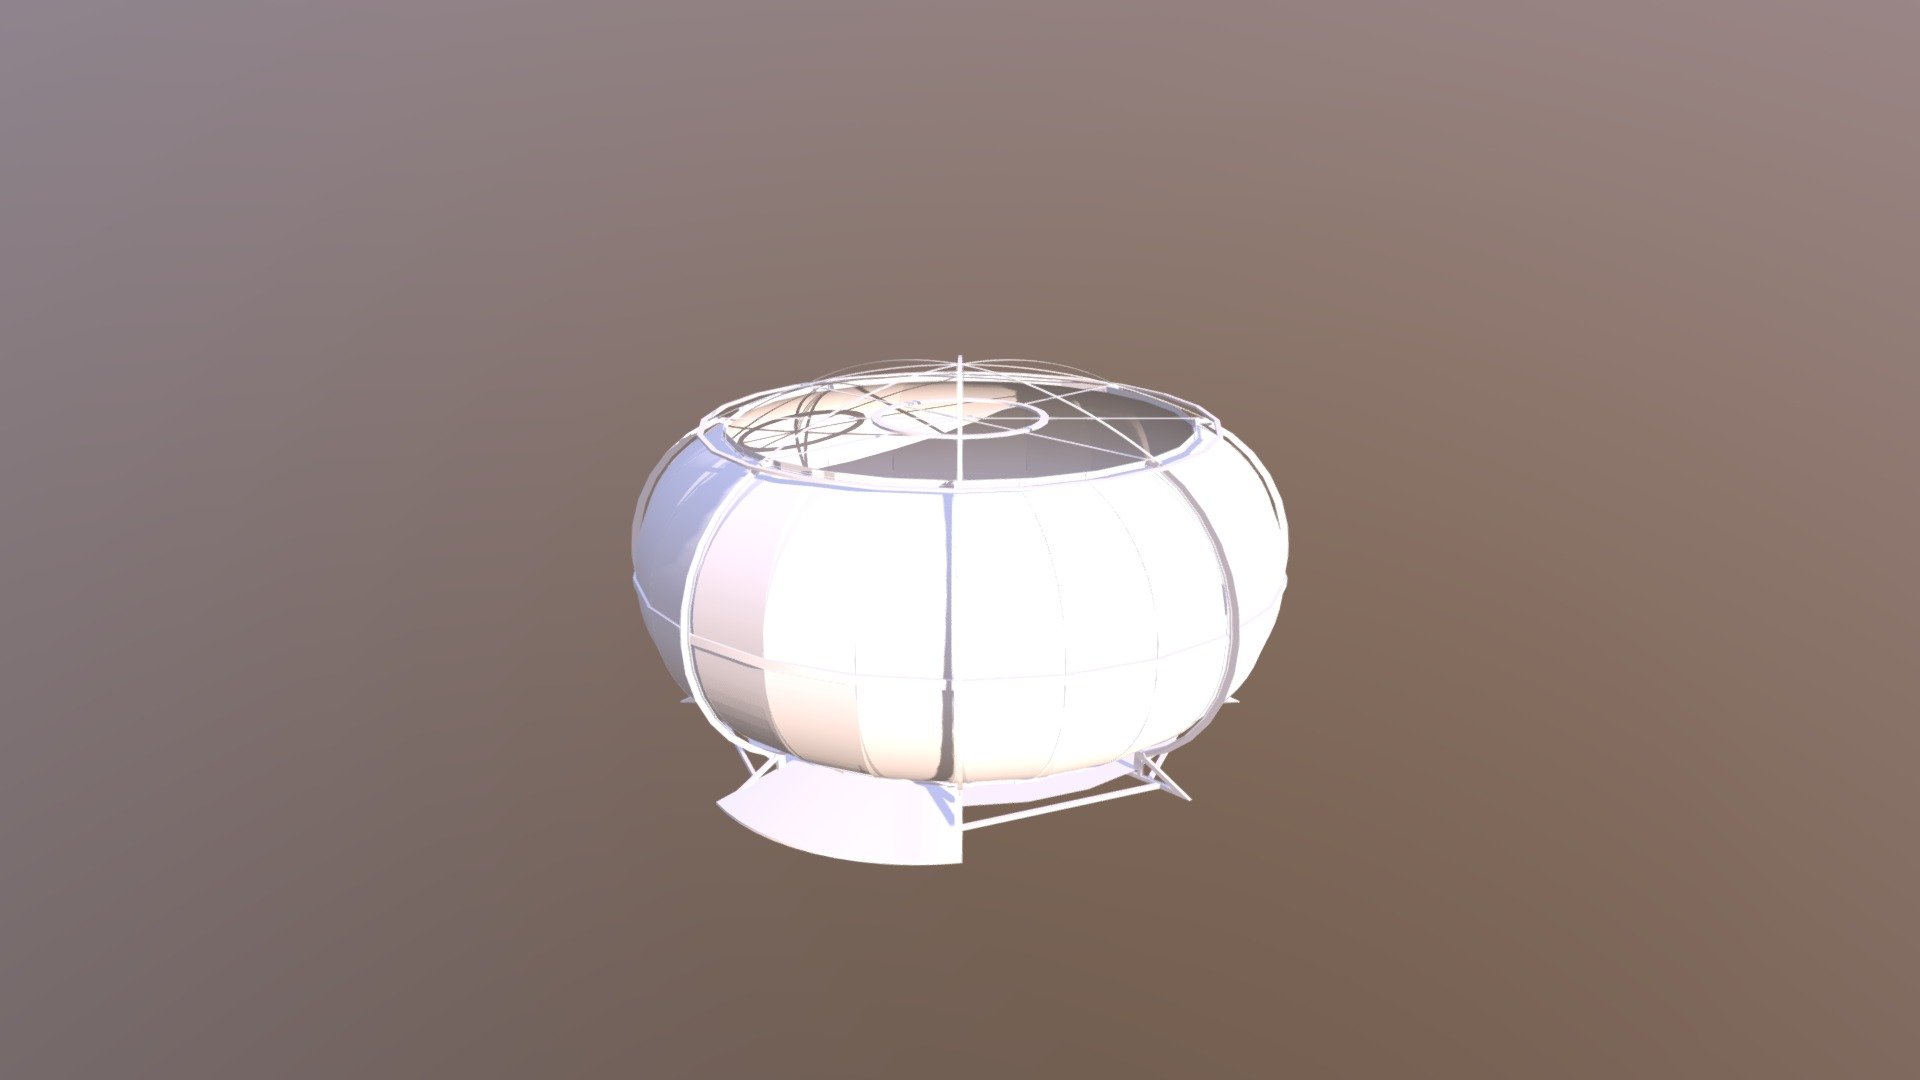 Miroir Atlas V Projet Espace 30mars2019